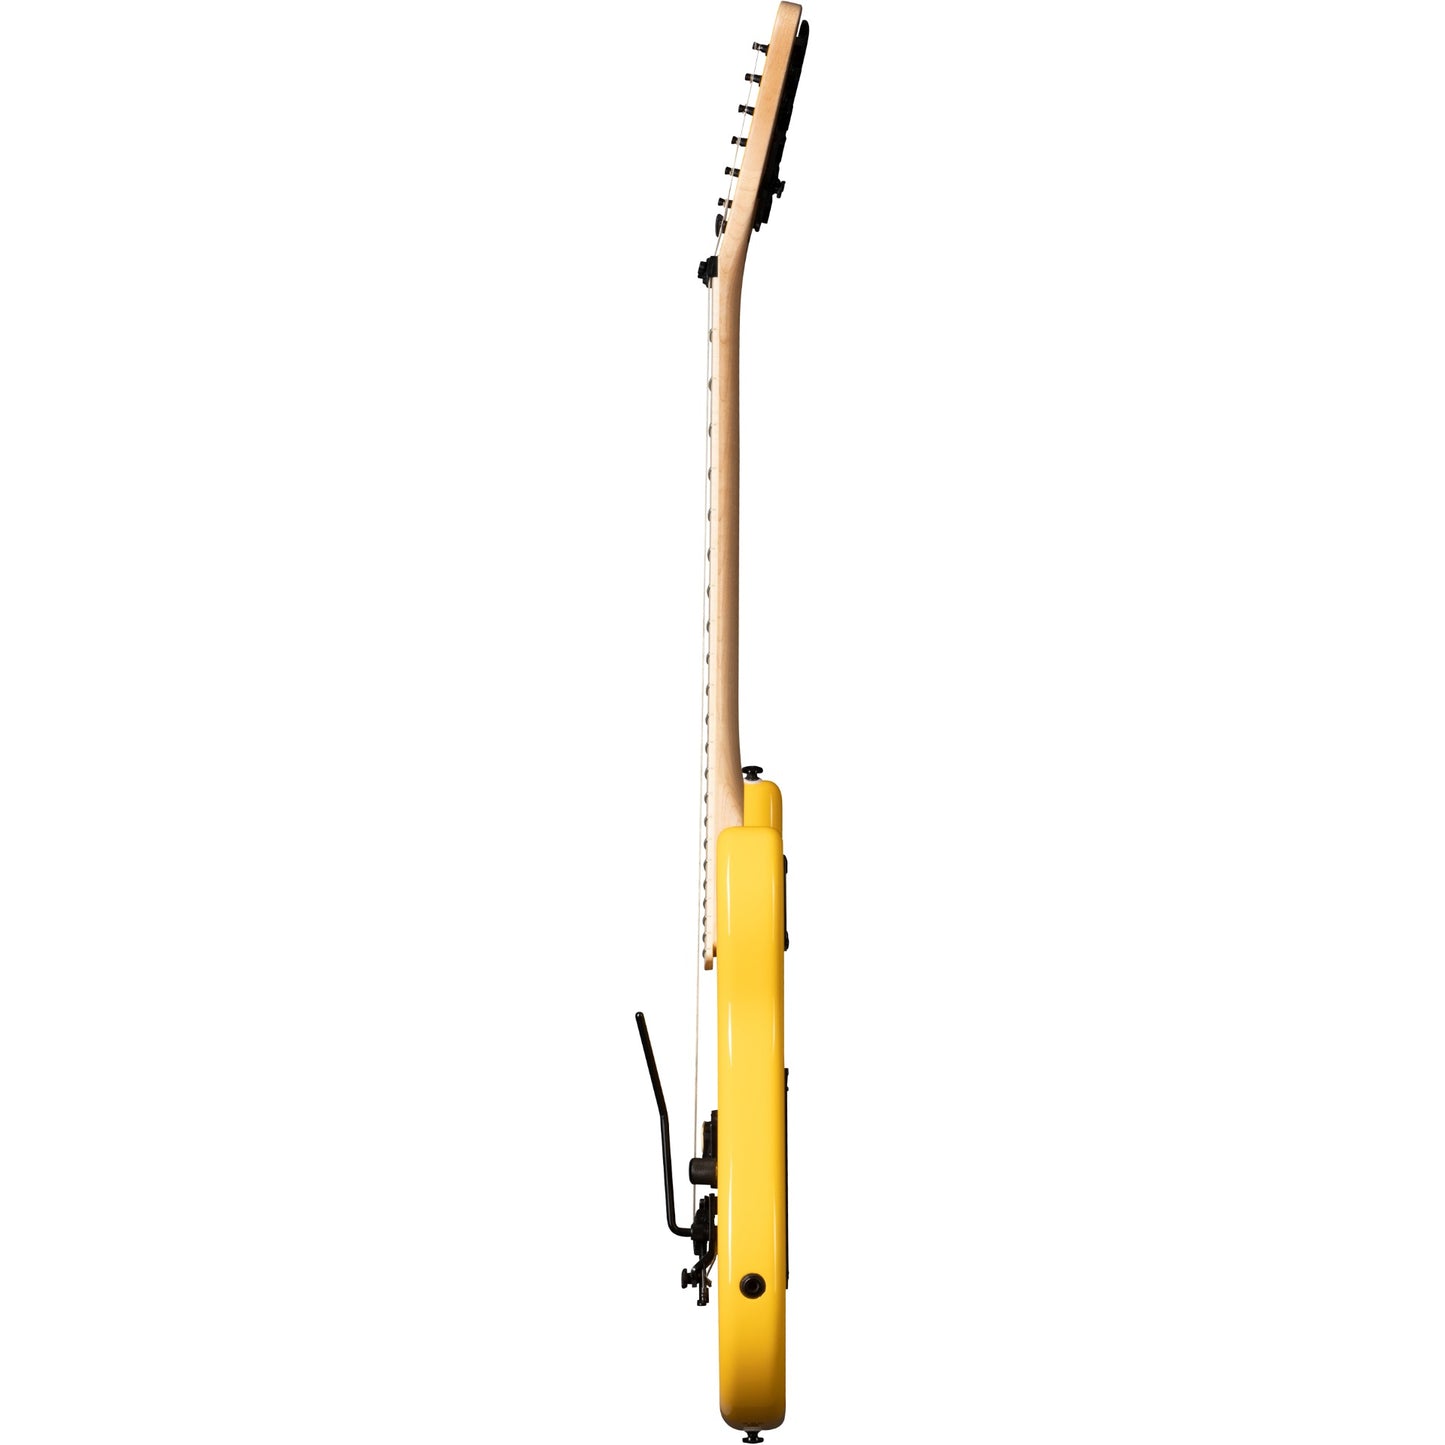 Kramer Baretta Electric Guitar in Bumblebee Yellow